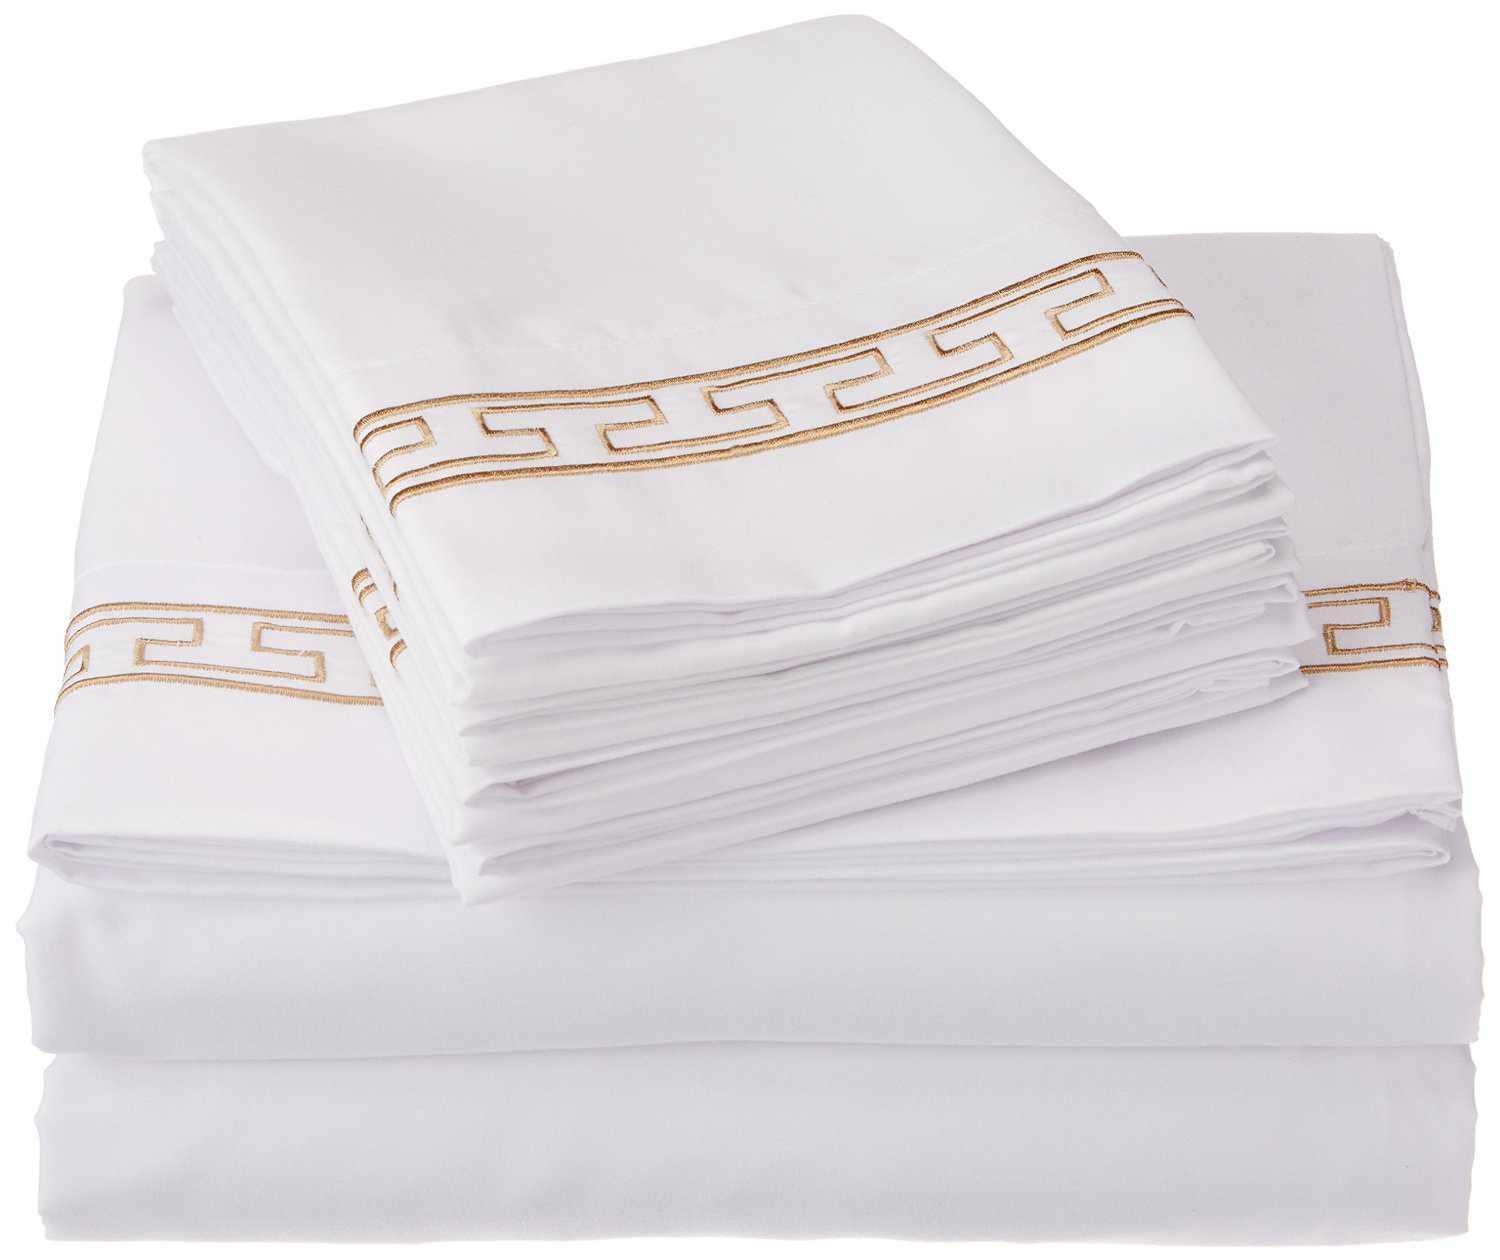 Superior 3000 Series Wrinkle Resistant Elegant Embroidered 6 Piece Sheet Set - White/Gold